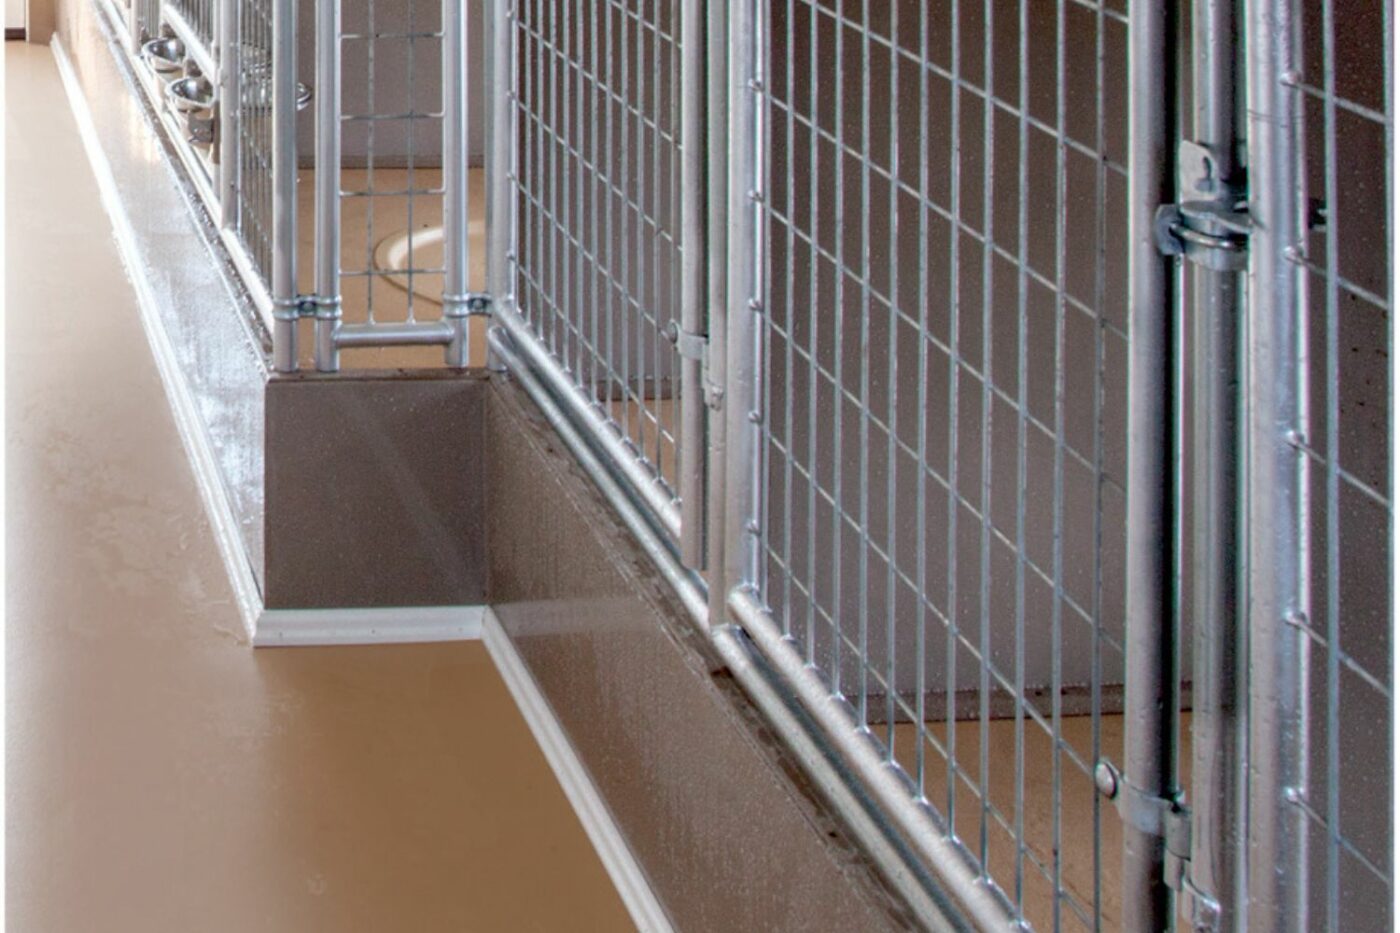 raised floor - dog kennel fencing and flooring